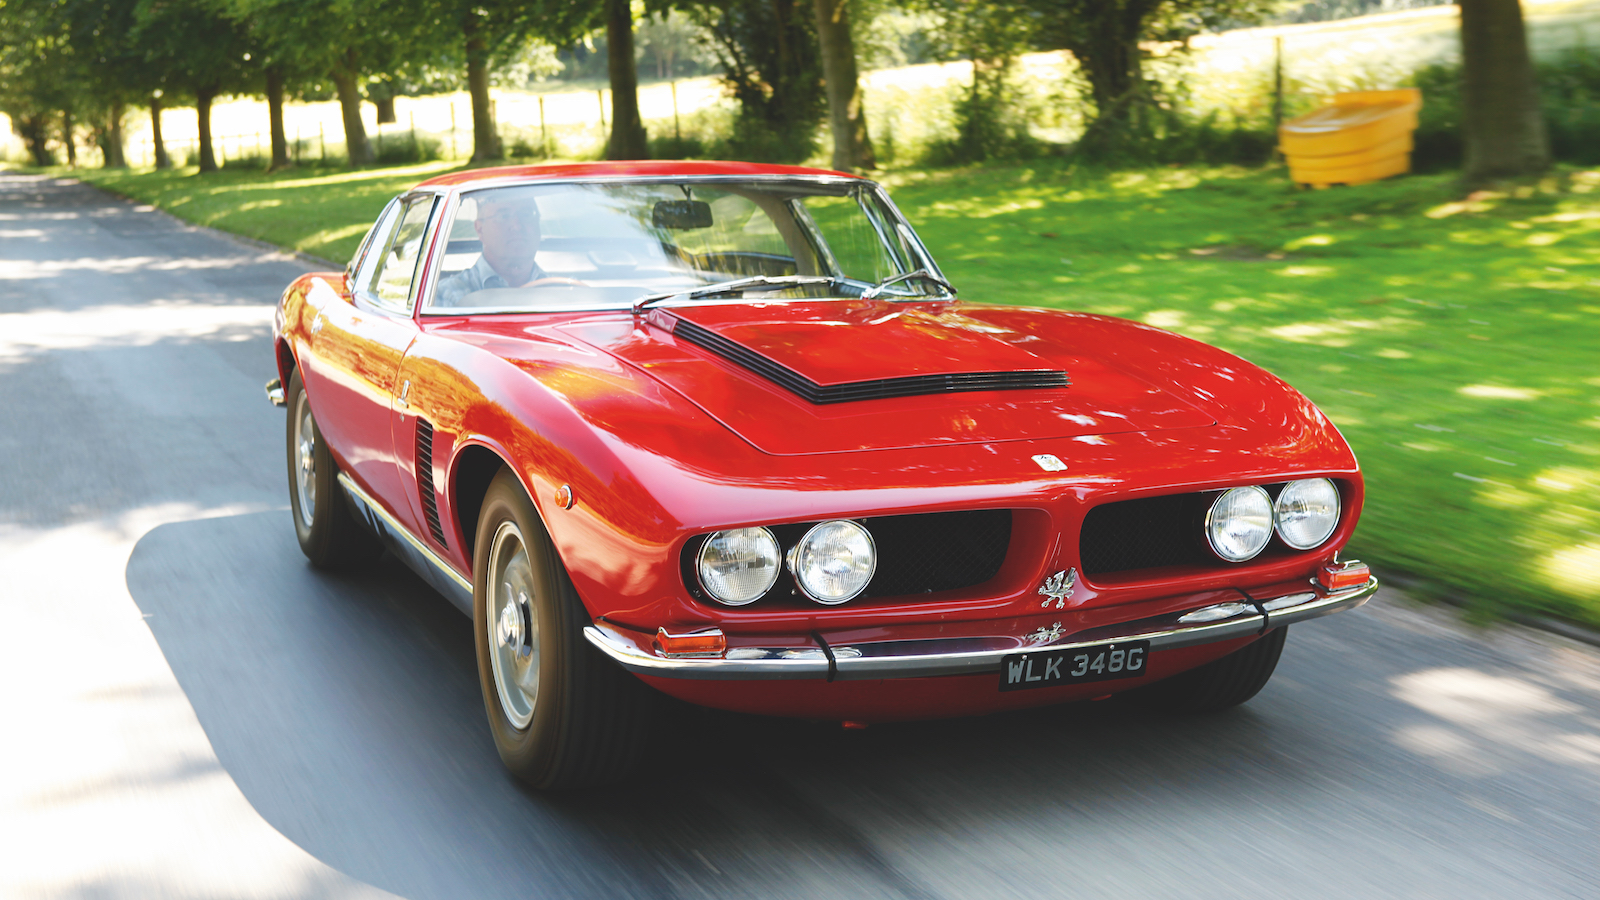 16 European classics with a Detroit V8